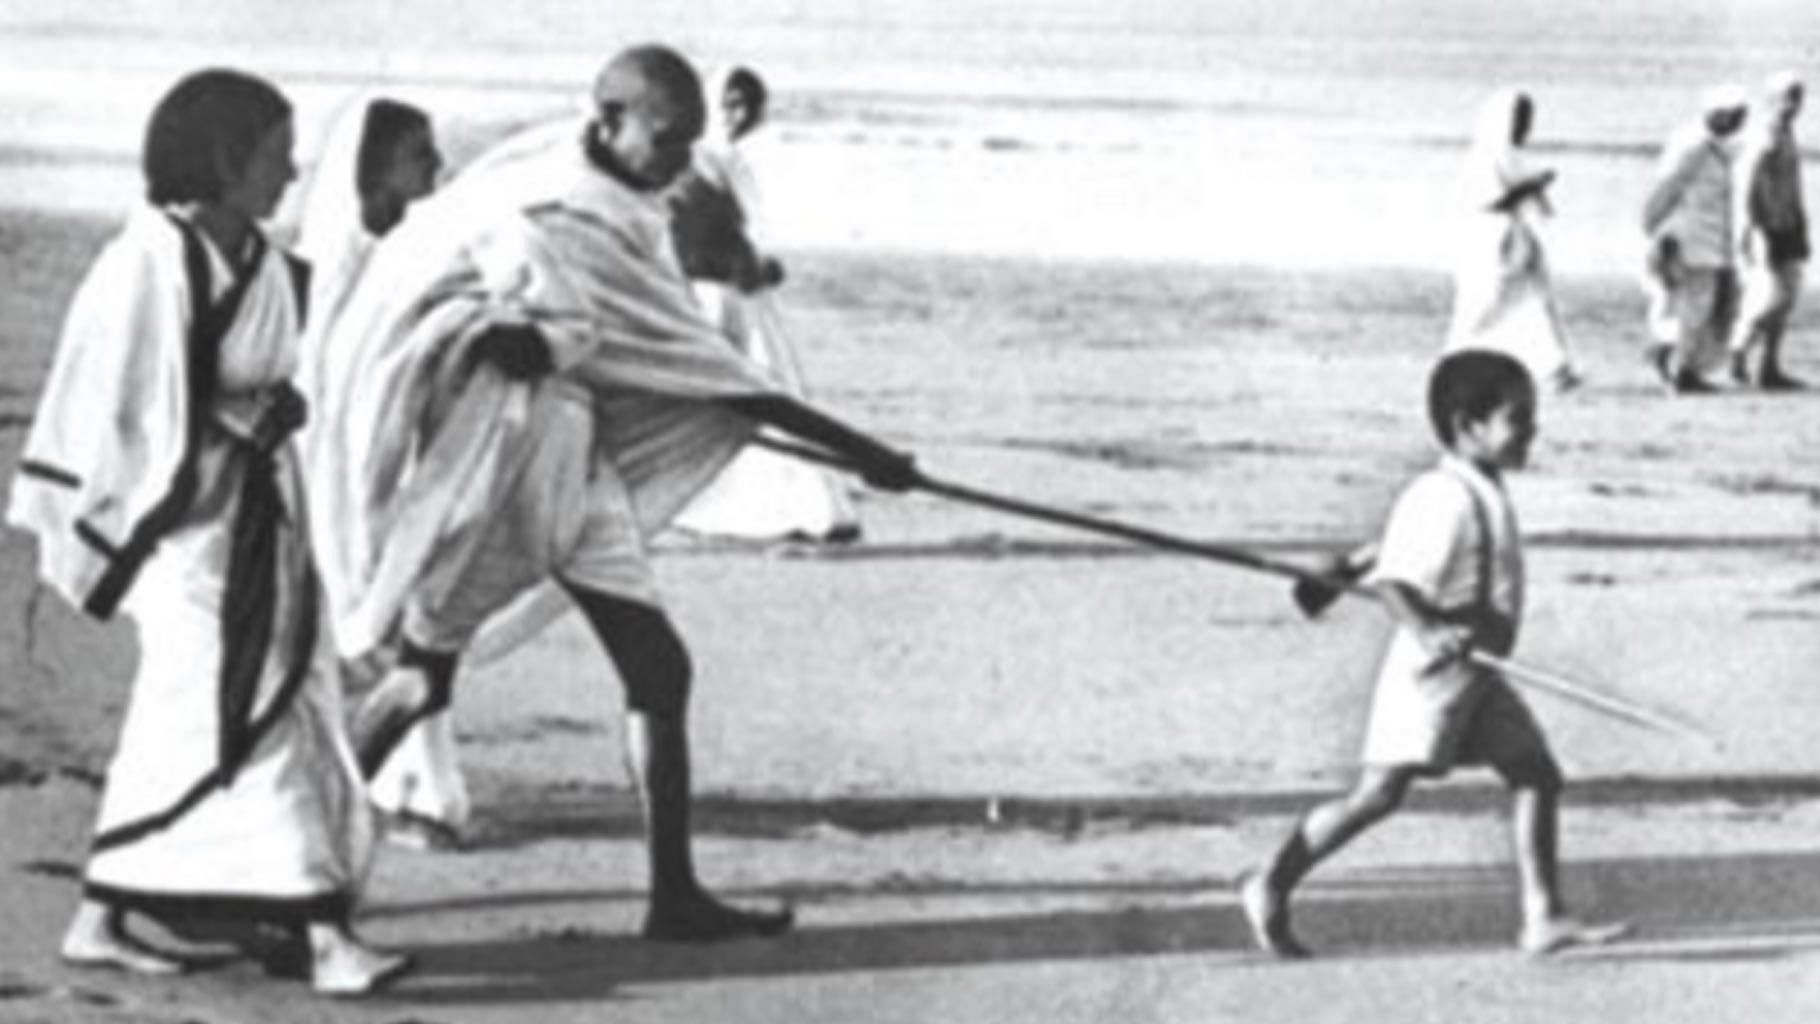 File photo of Kanubhai Gandhi pulling Mahatma Gandhi’s stick during a walk on a beach. (Photo Courtesy: <i><a href="http://www.universityexpress.co.in/delhiuniversity/2015/10/5-lesser-known-facts-mahatma-gandhi/">University Express</a></i>)